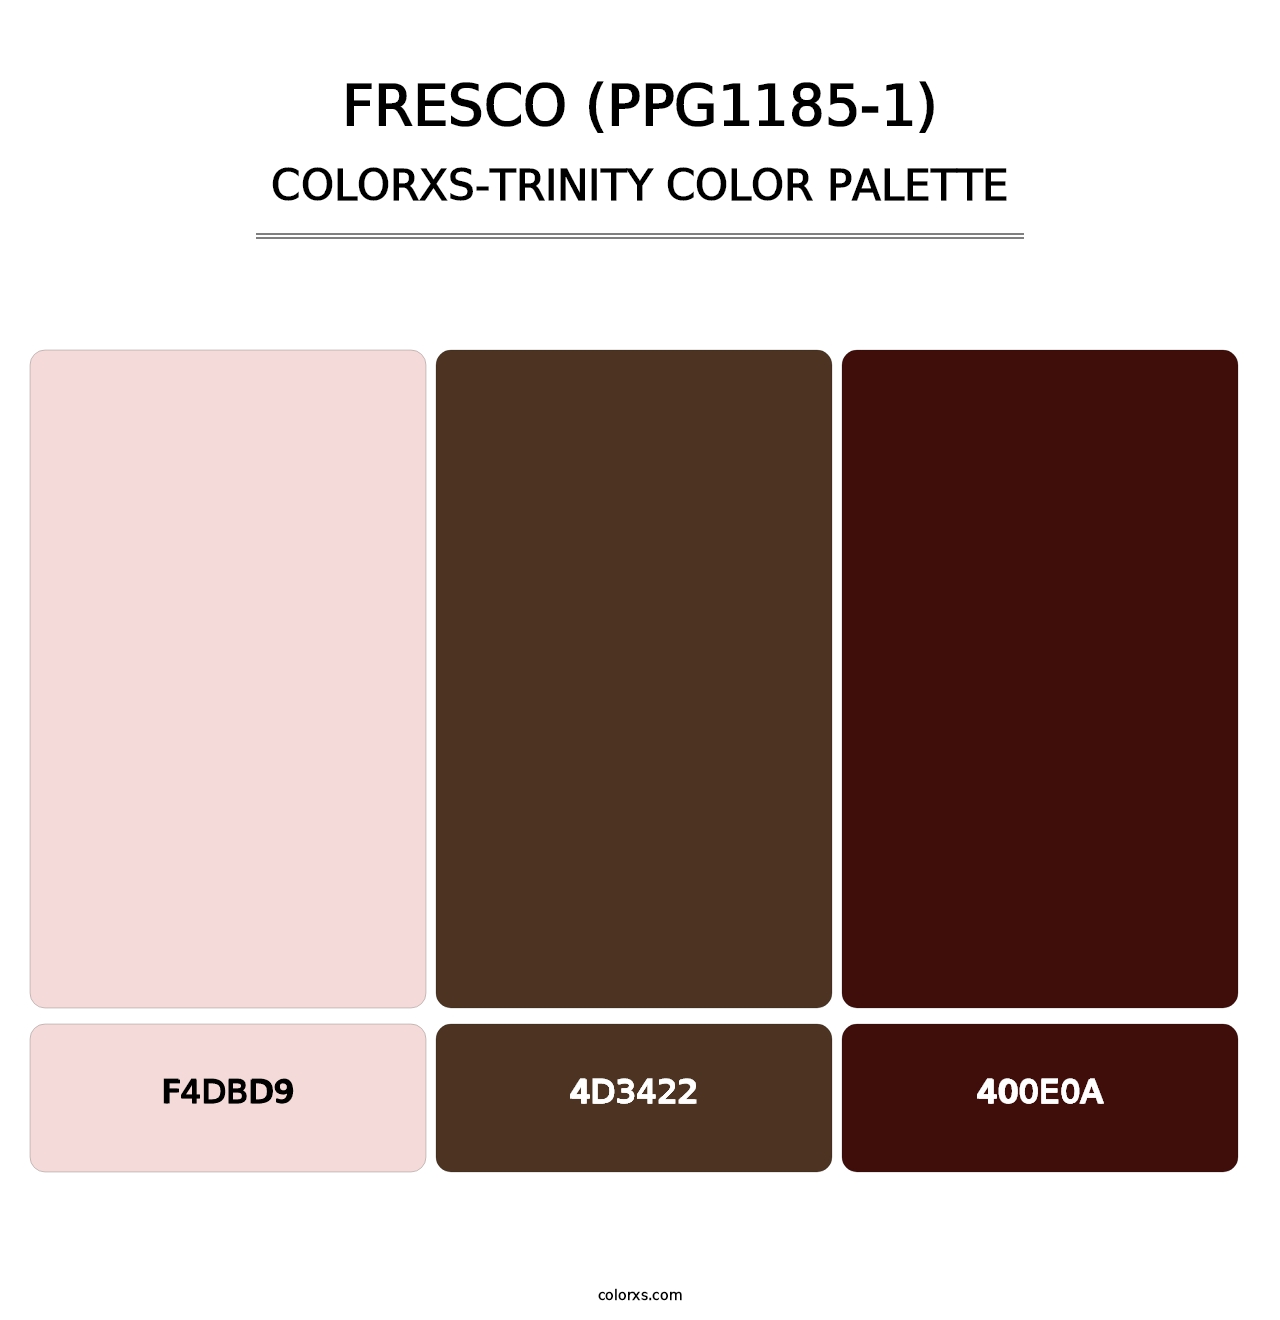 Fresco (PPG1185-1) - Colorxs Trinity Palette